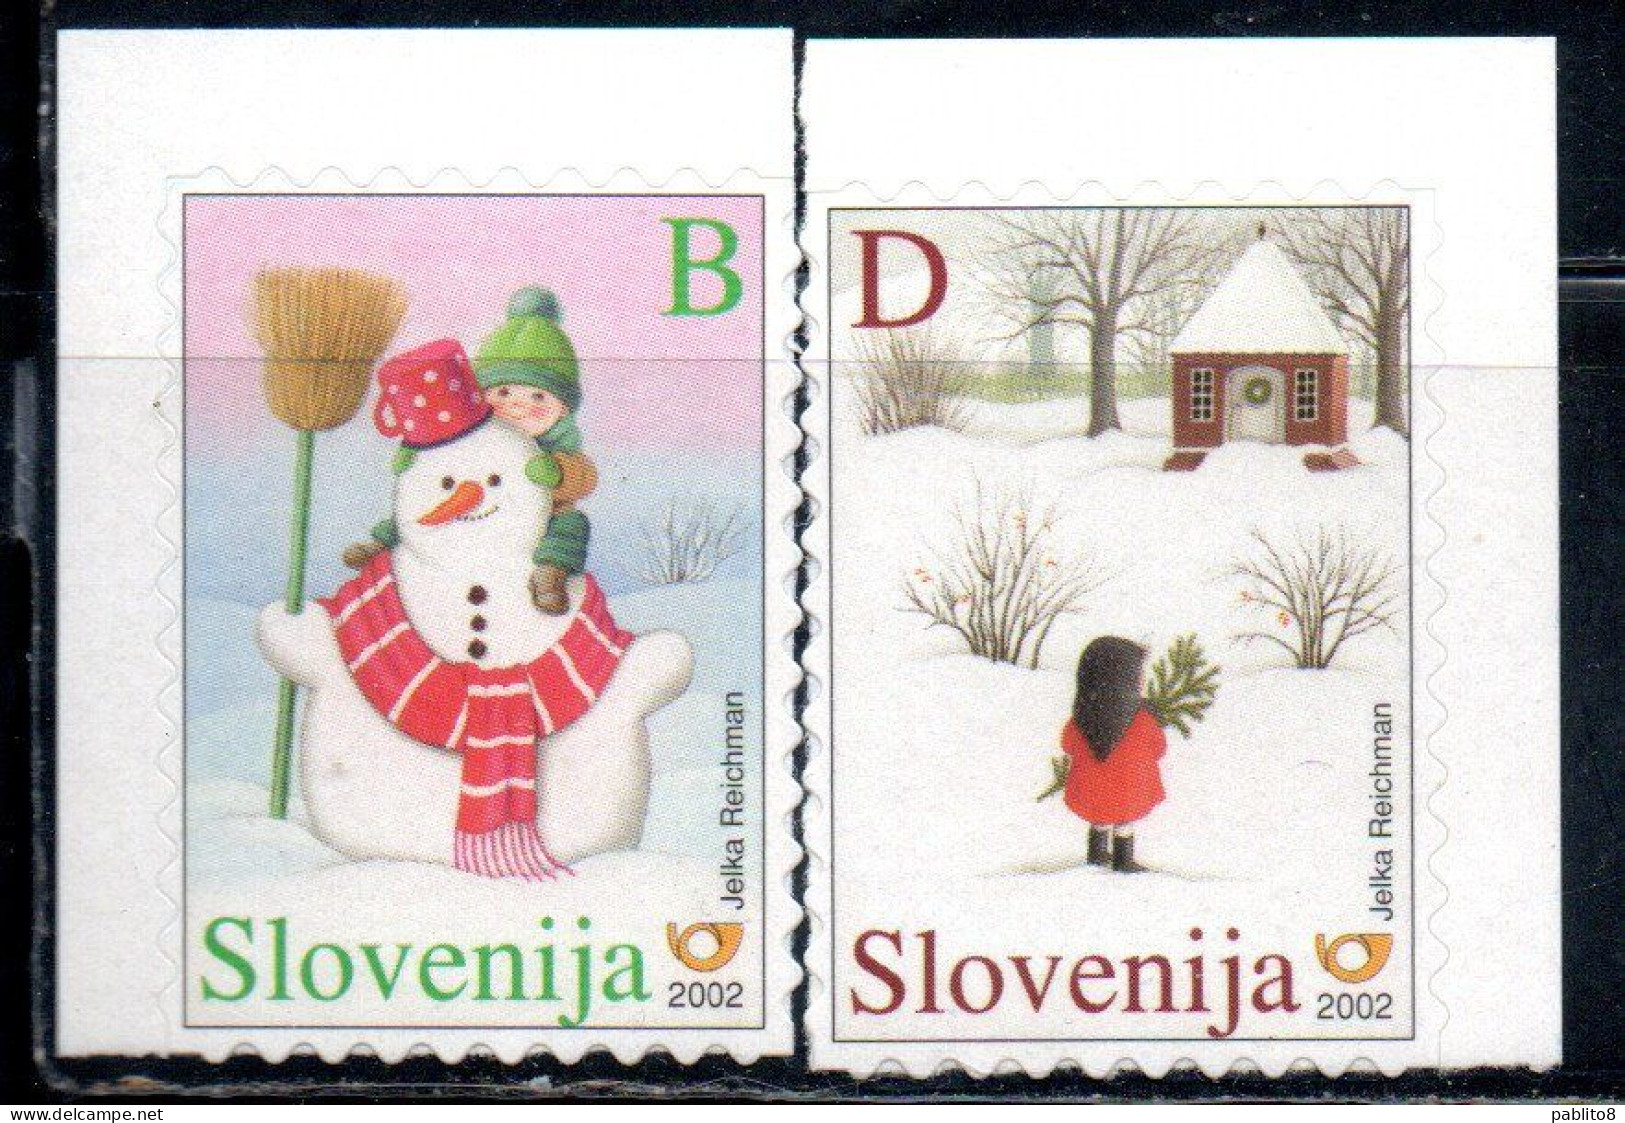 SLOVENIA SLOVENIJA SLOVENIE SLOWENIEN 2002 CHRISTMAS NATALE NOEL WEIHNACHTEN NAVIDAD COMPLETE SET SERIE COMPLETA MNH - Slowenien